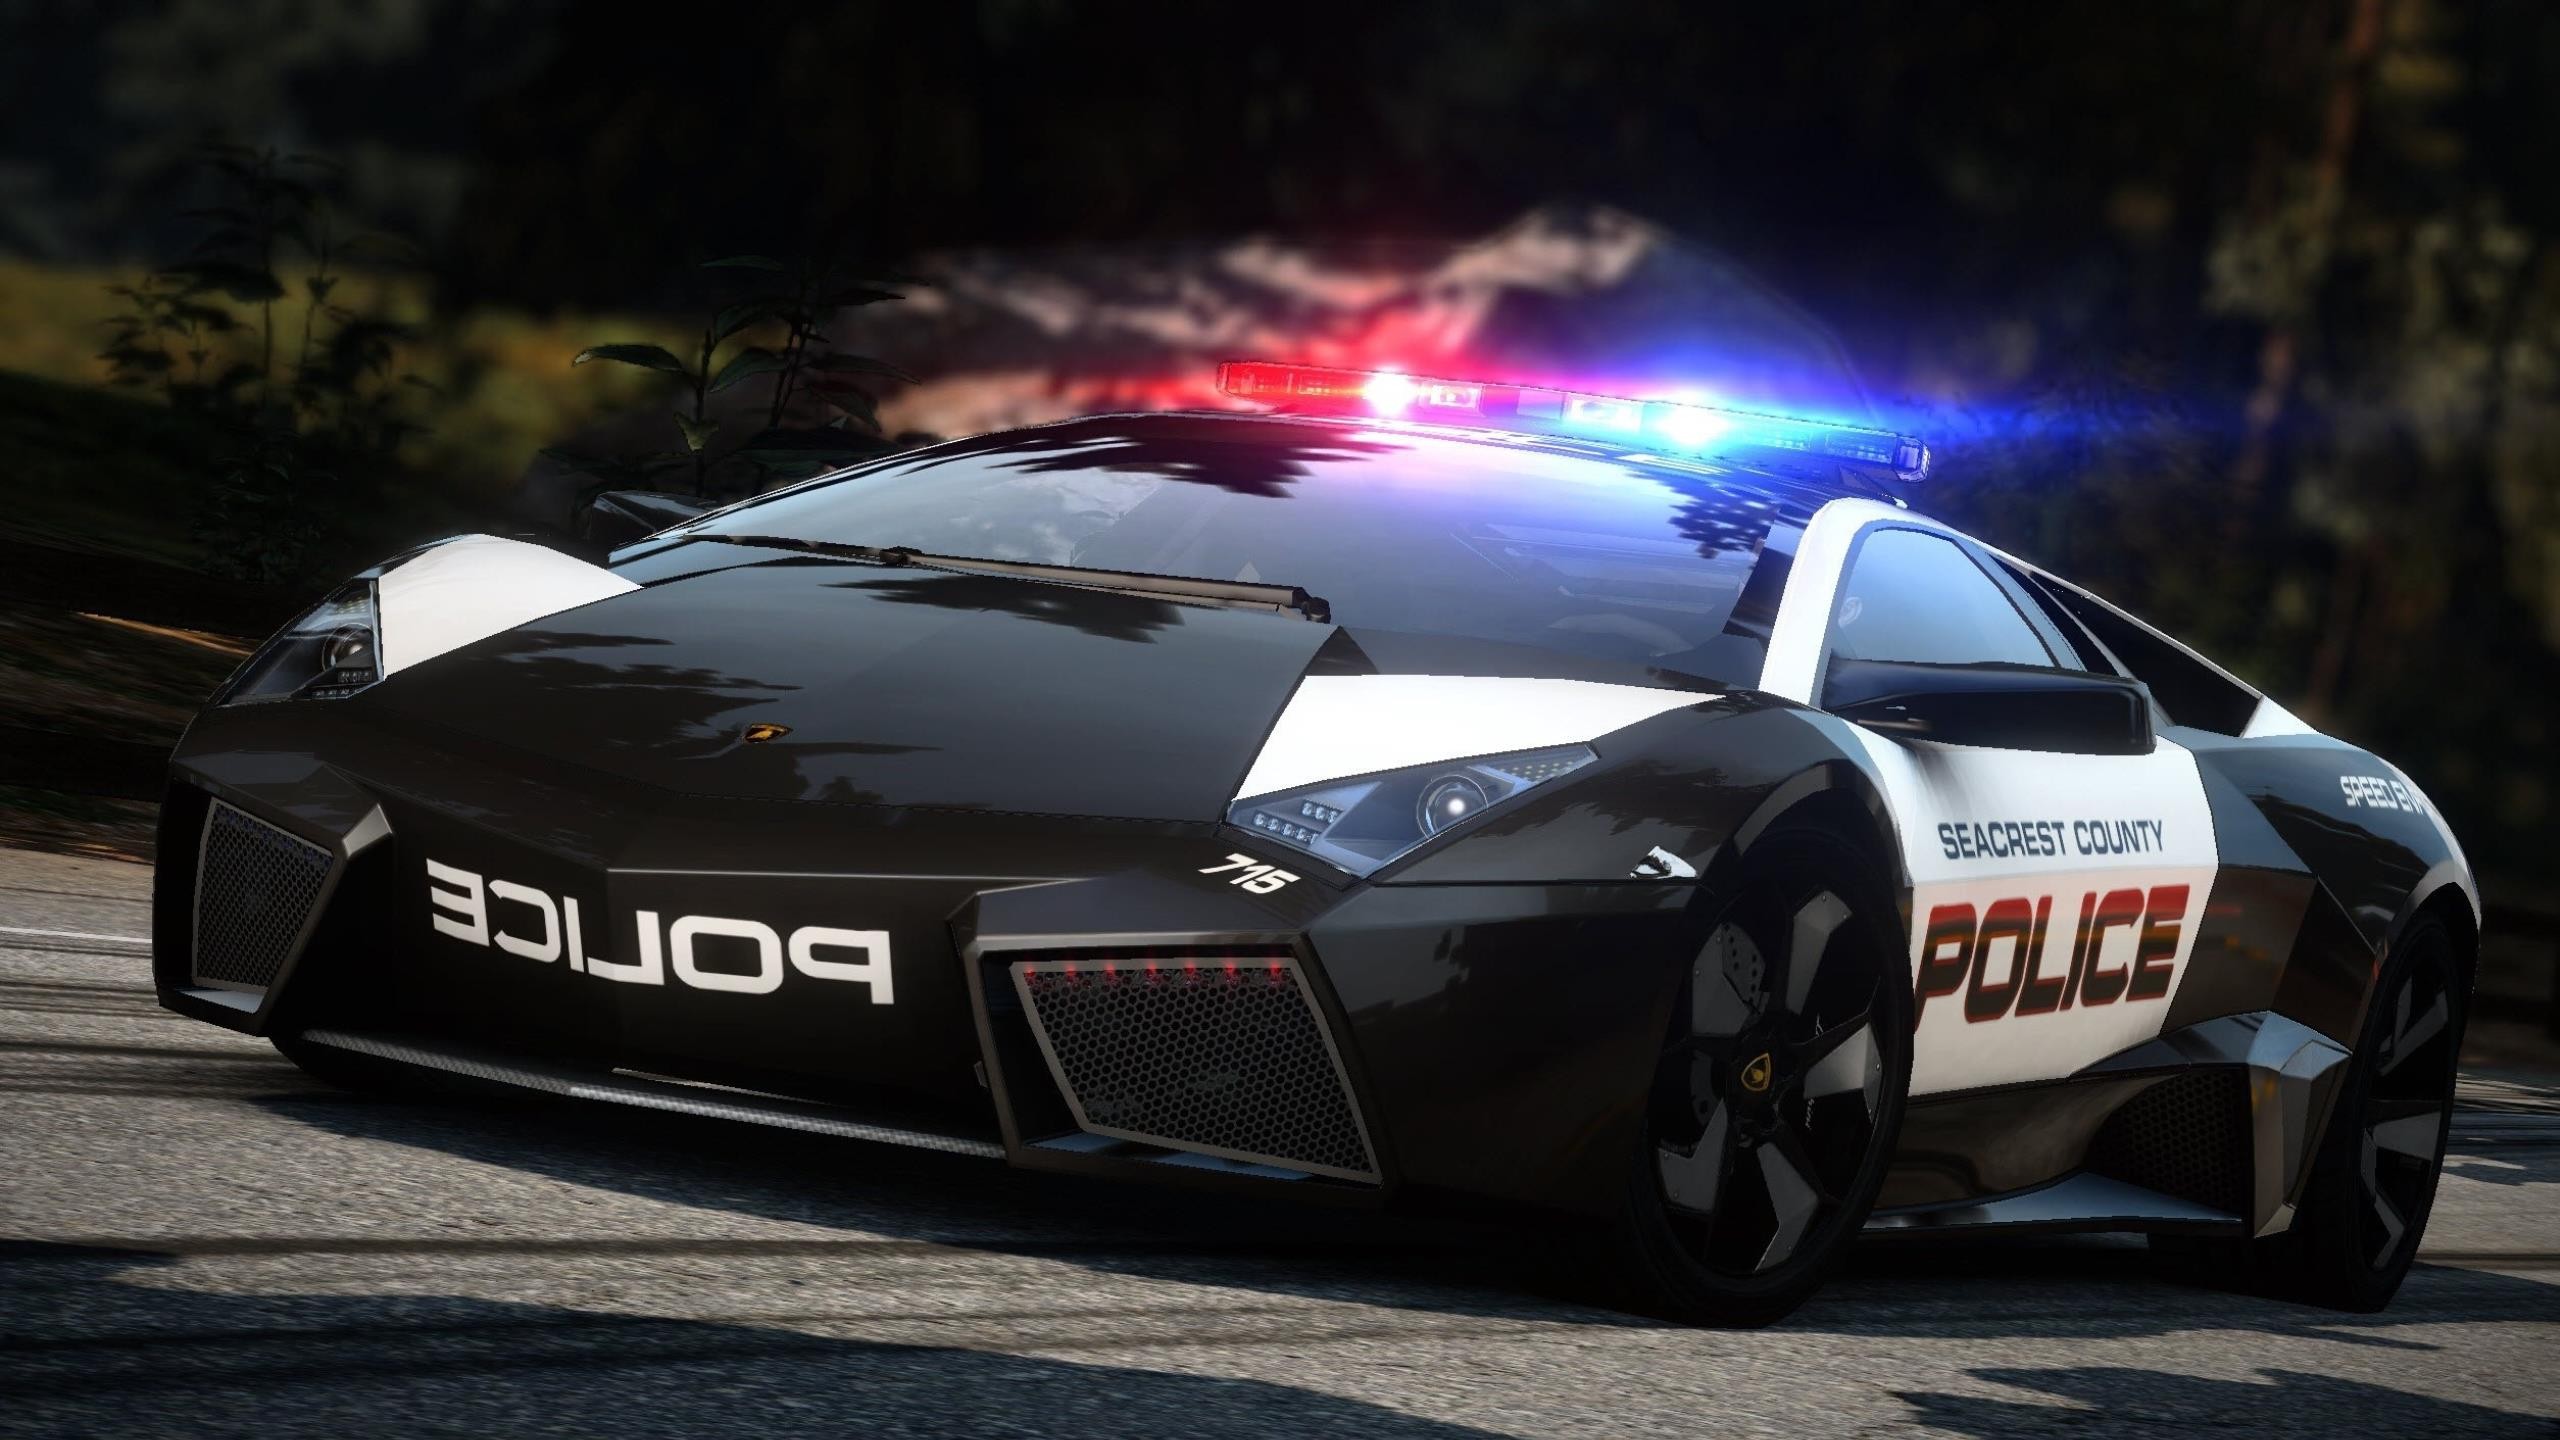 Lamborghini Lamborghini Patrol Police Car Desktop Backgrounds for